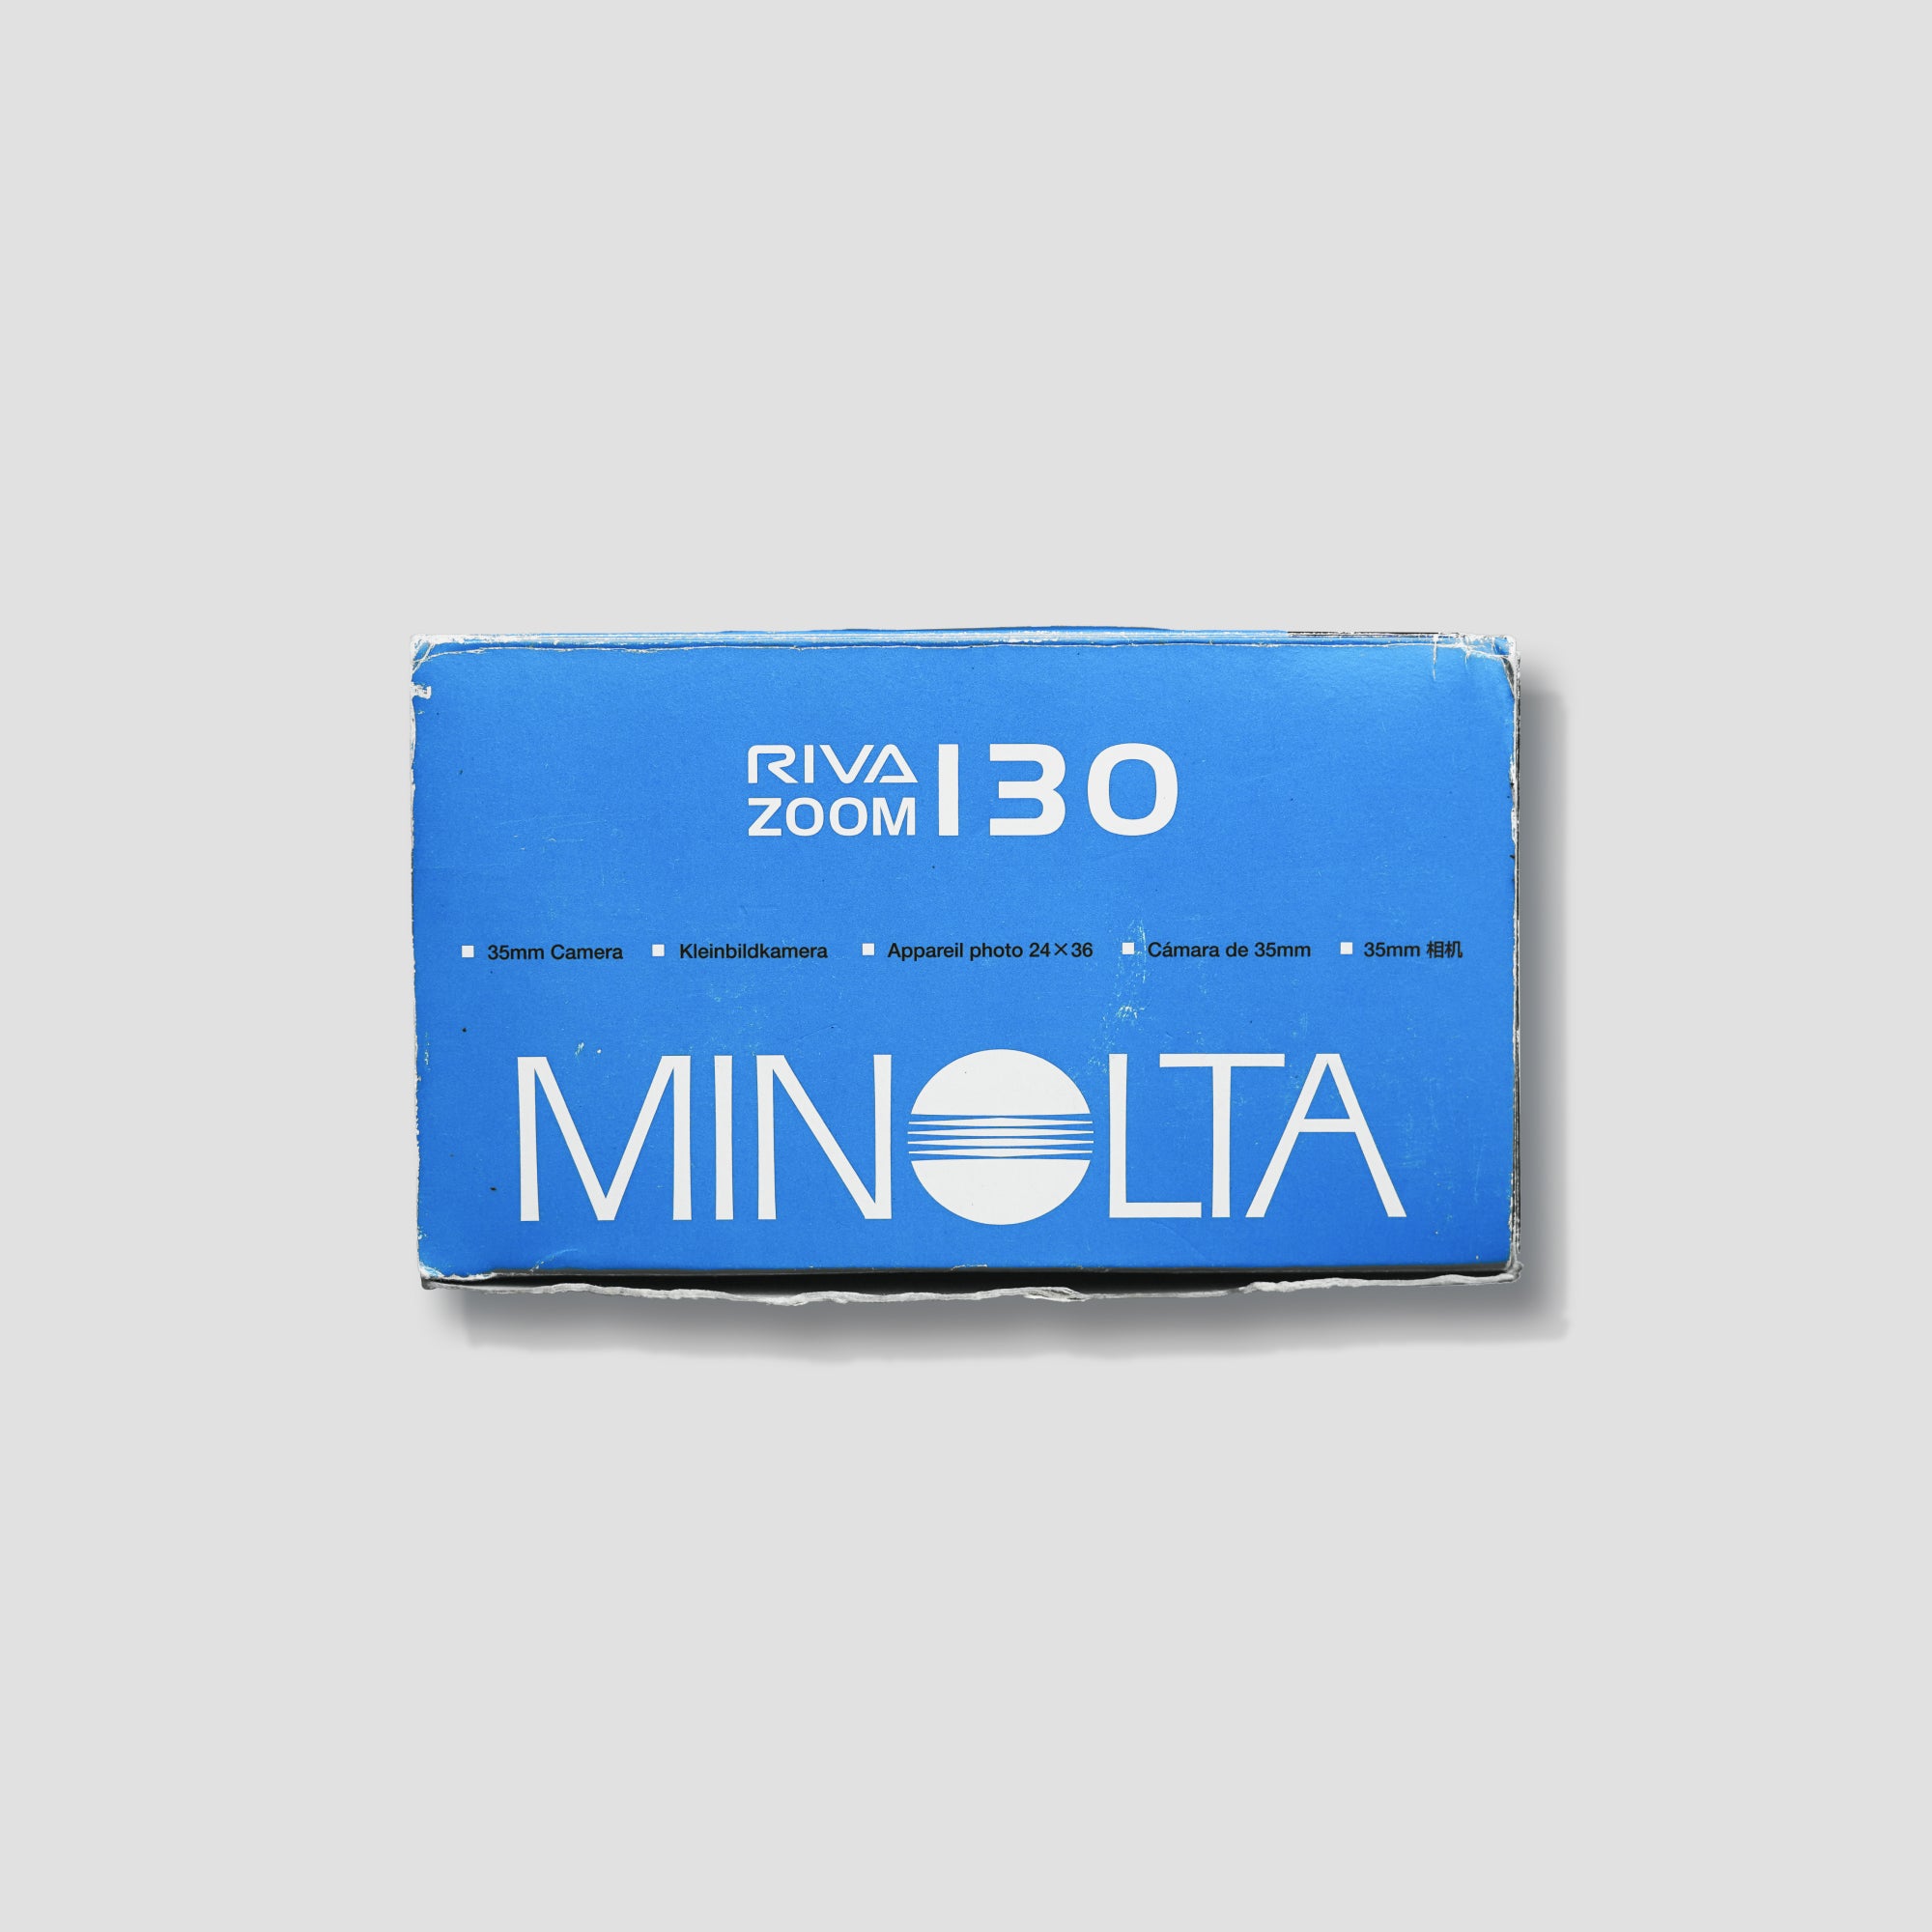 Minolta Riva Zoom 130